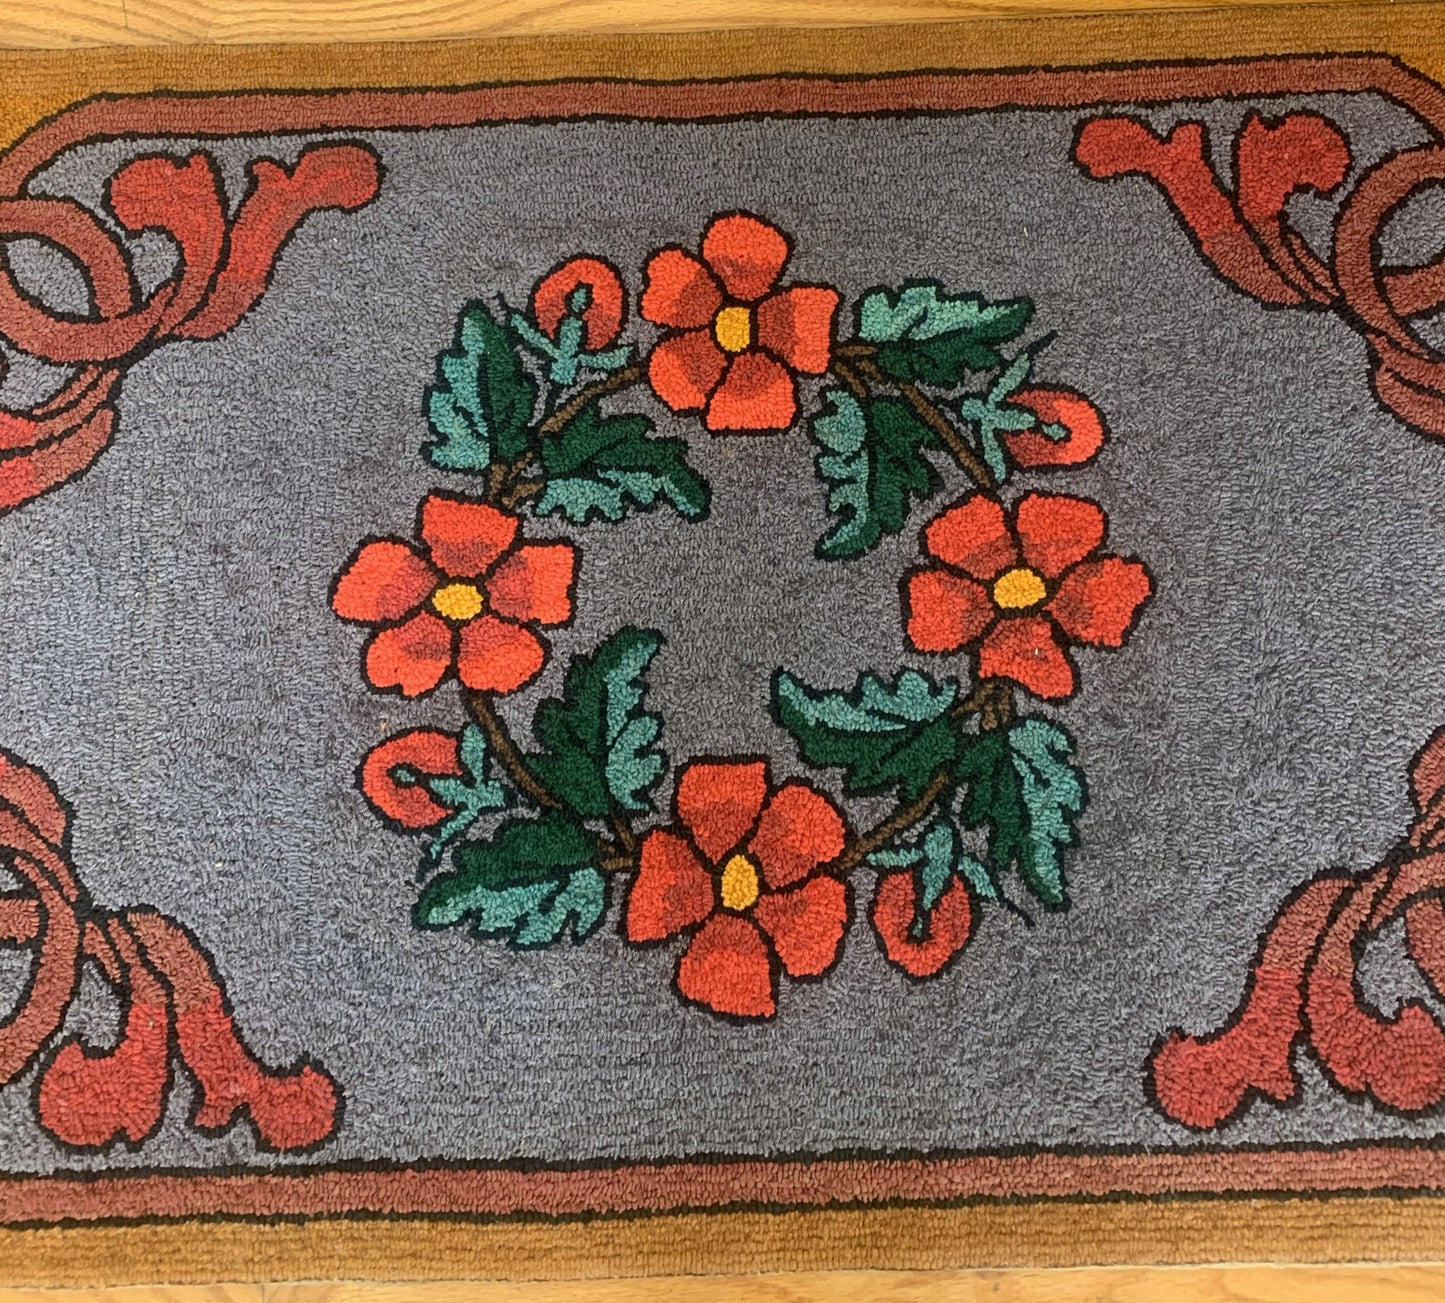 Original good condition of the antique rug